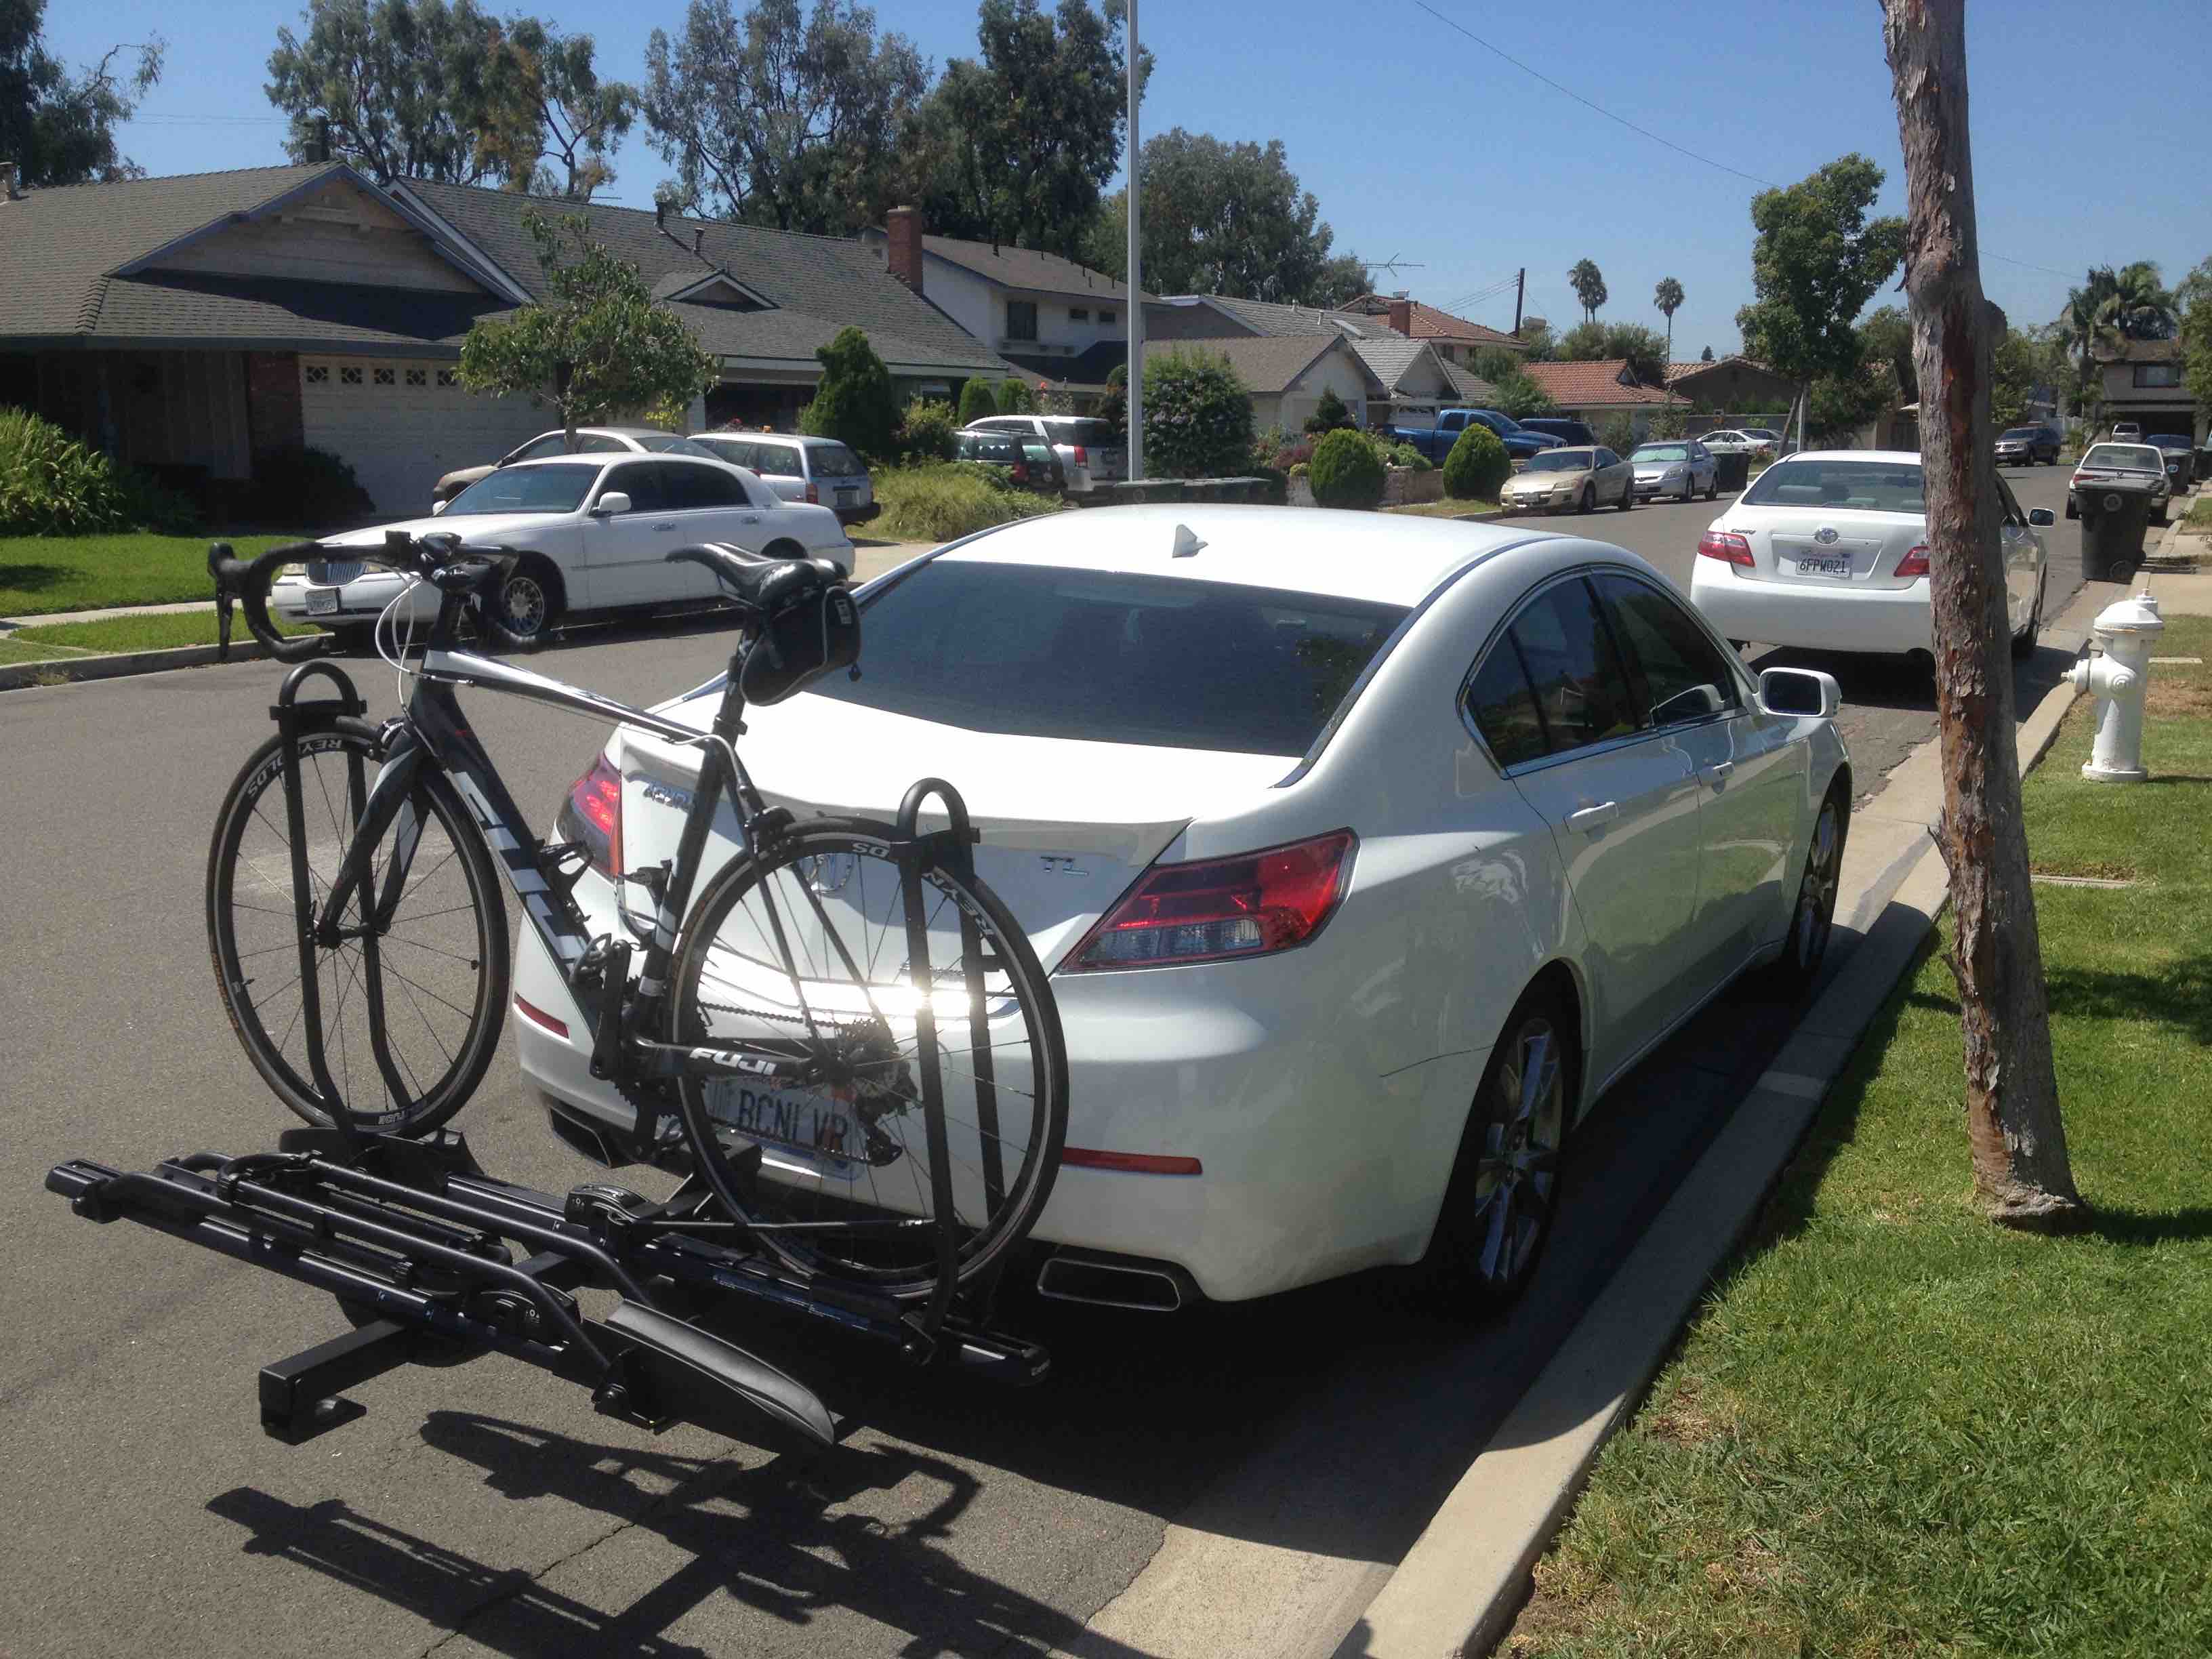 Hitch mounted bike rack with bicycle on back of sedan